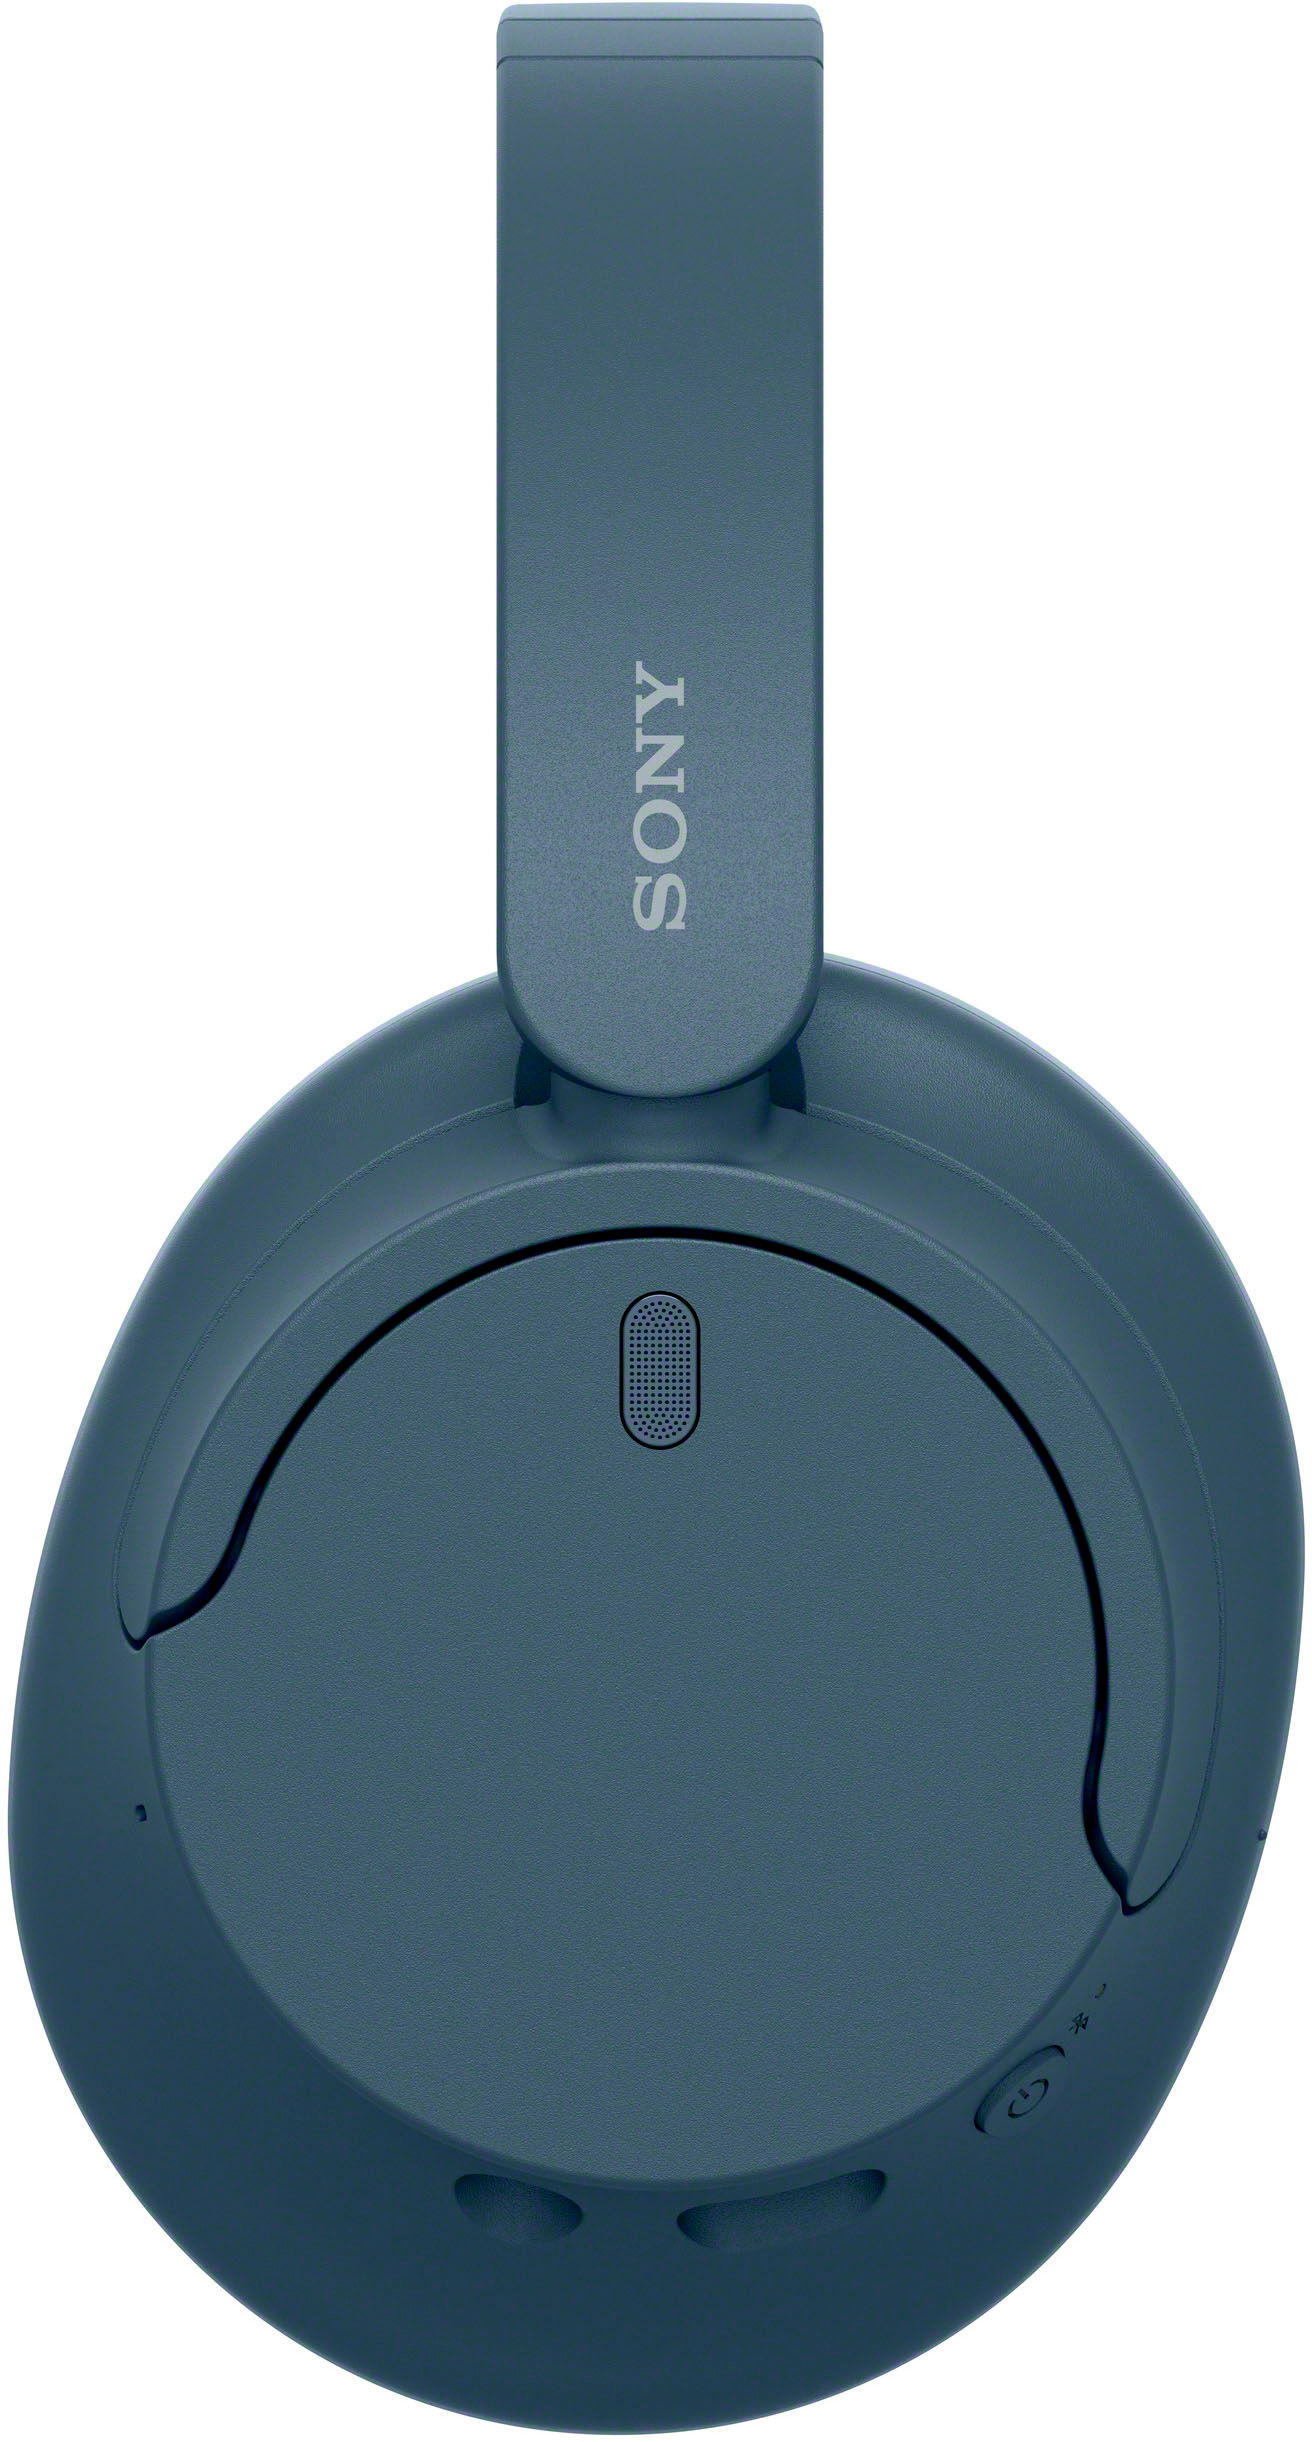 Sony WHCH720N Wireless Noise Canceling Headphones Blue WHCH720N/L